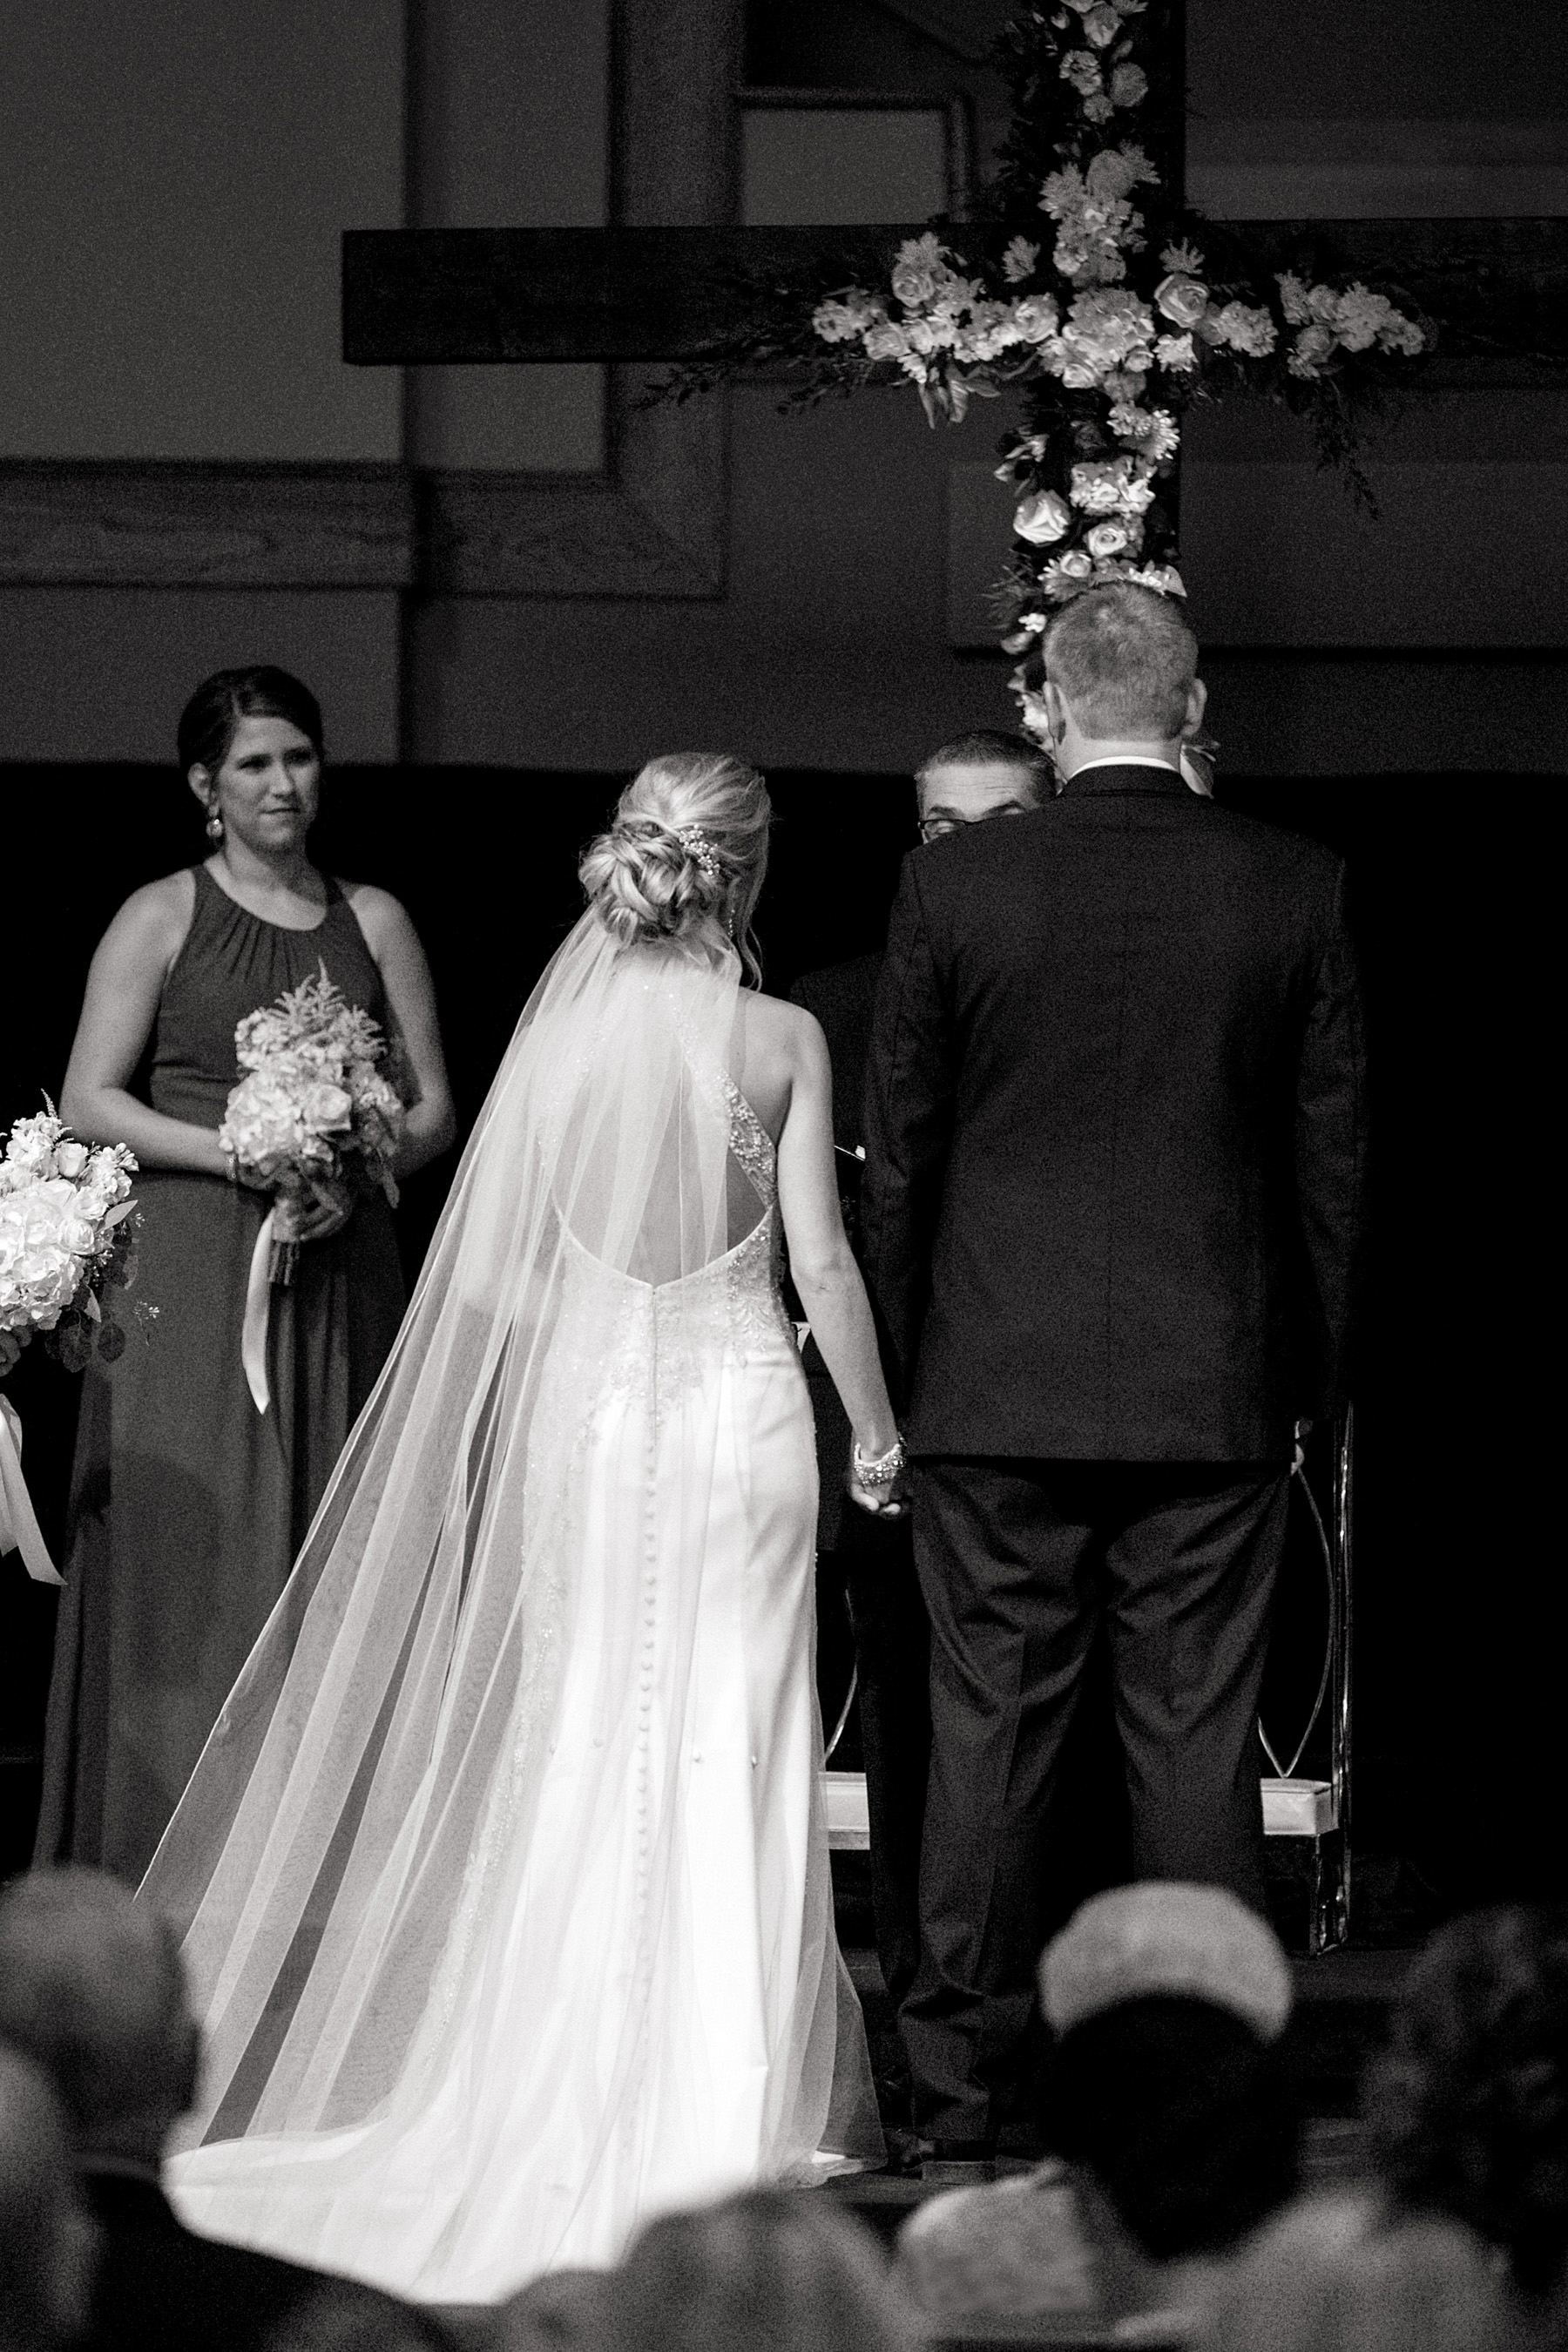 photo of wedding ceremony by ashley fisher photography